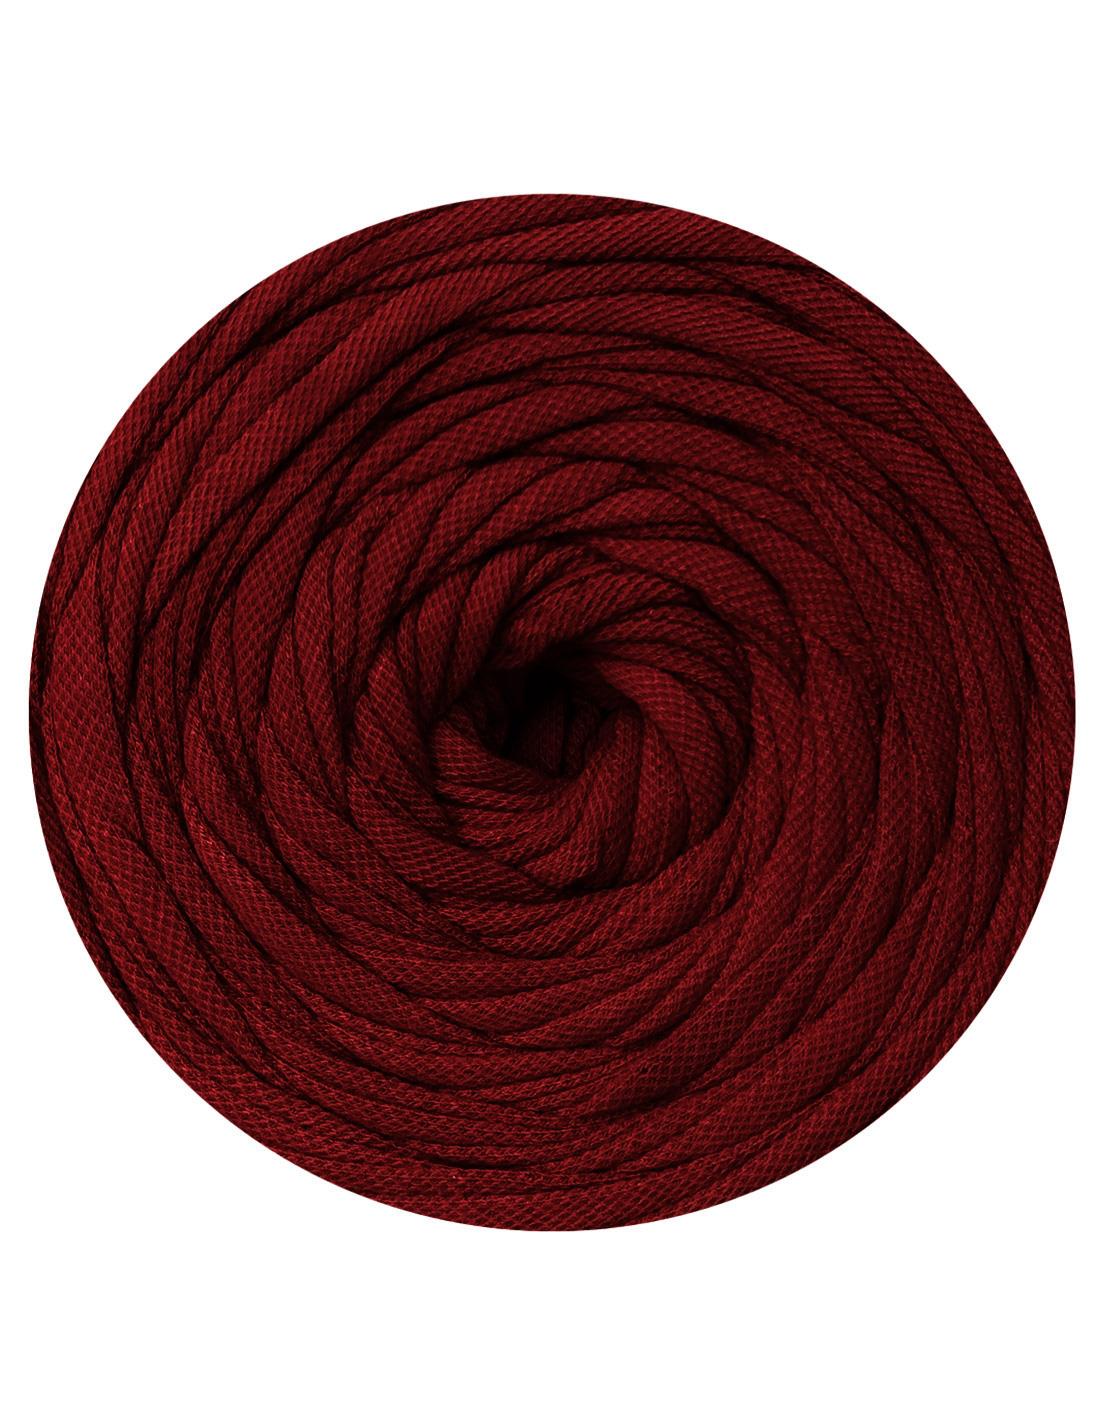 Muted maroon polo t-shirt yarn (100-120m)